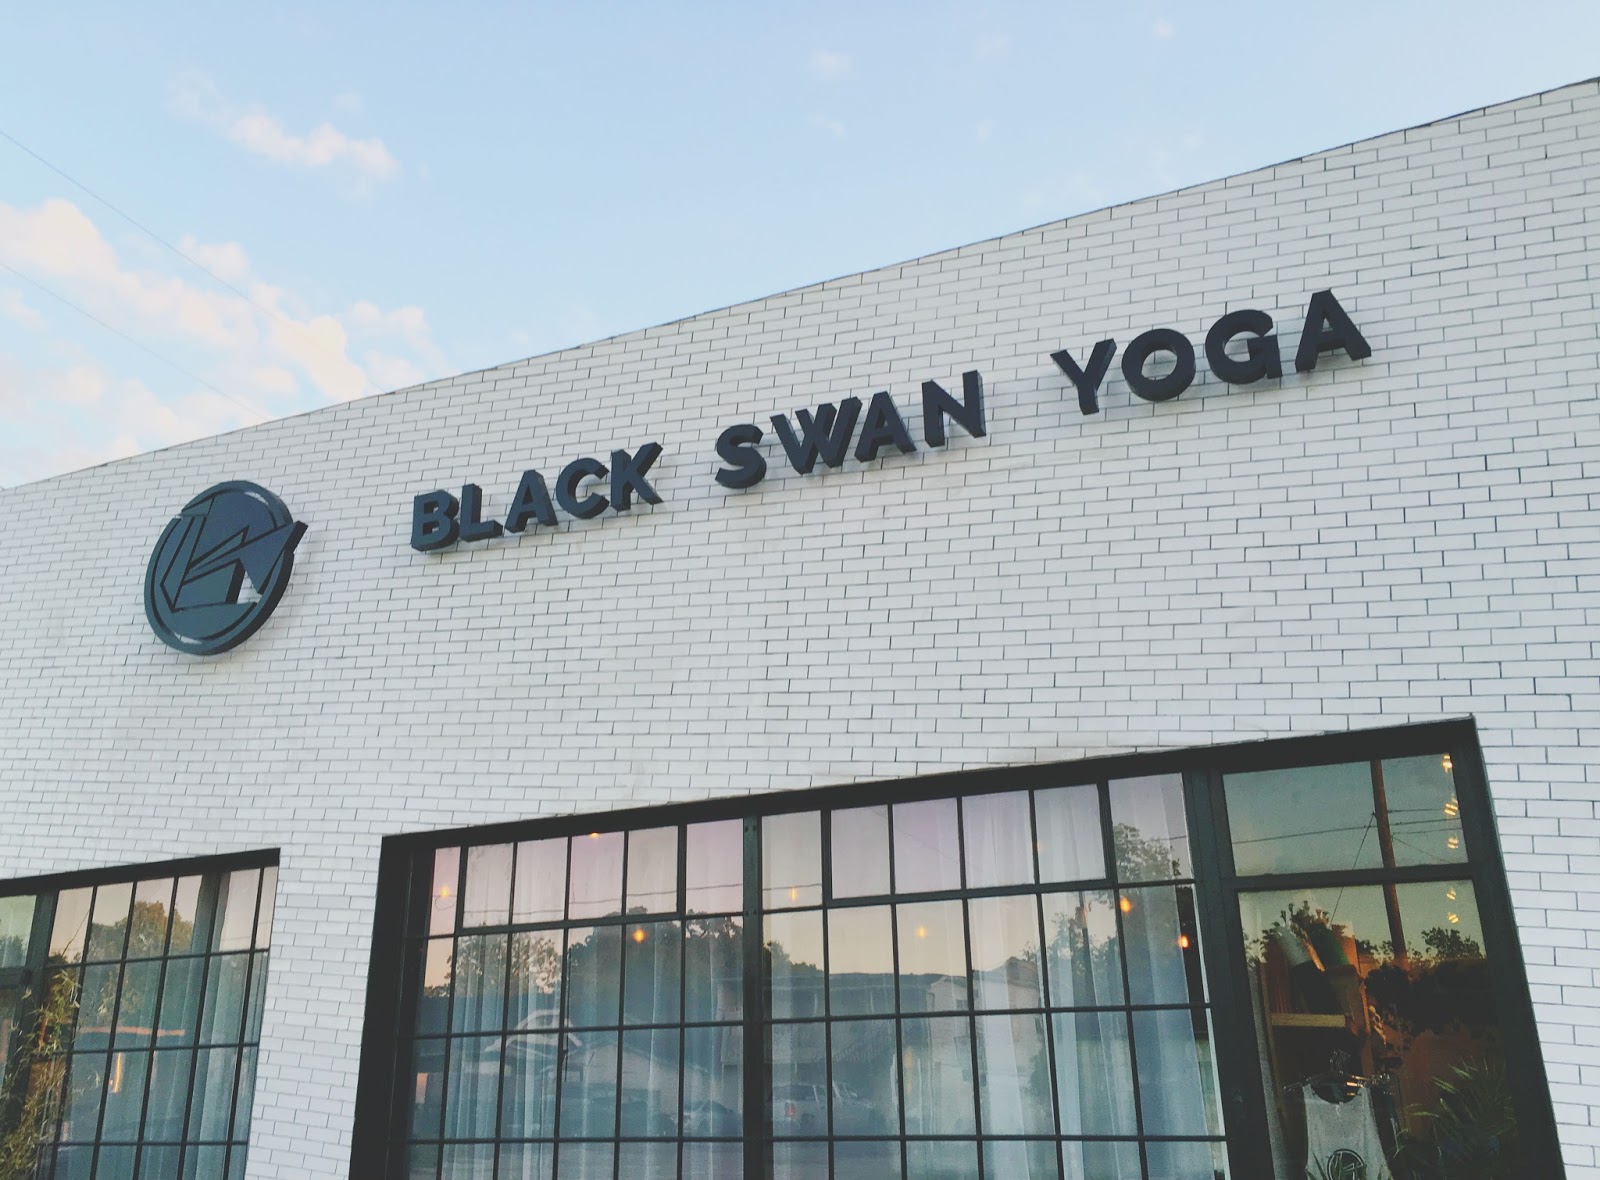 Black Swan Yoga - a studio participating in Houston's ClassPass program